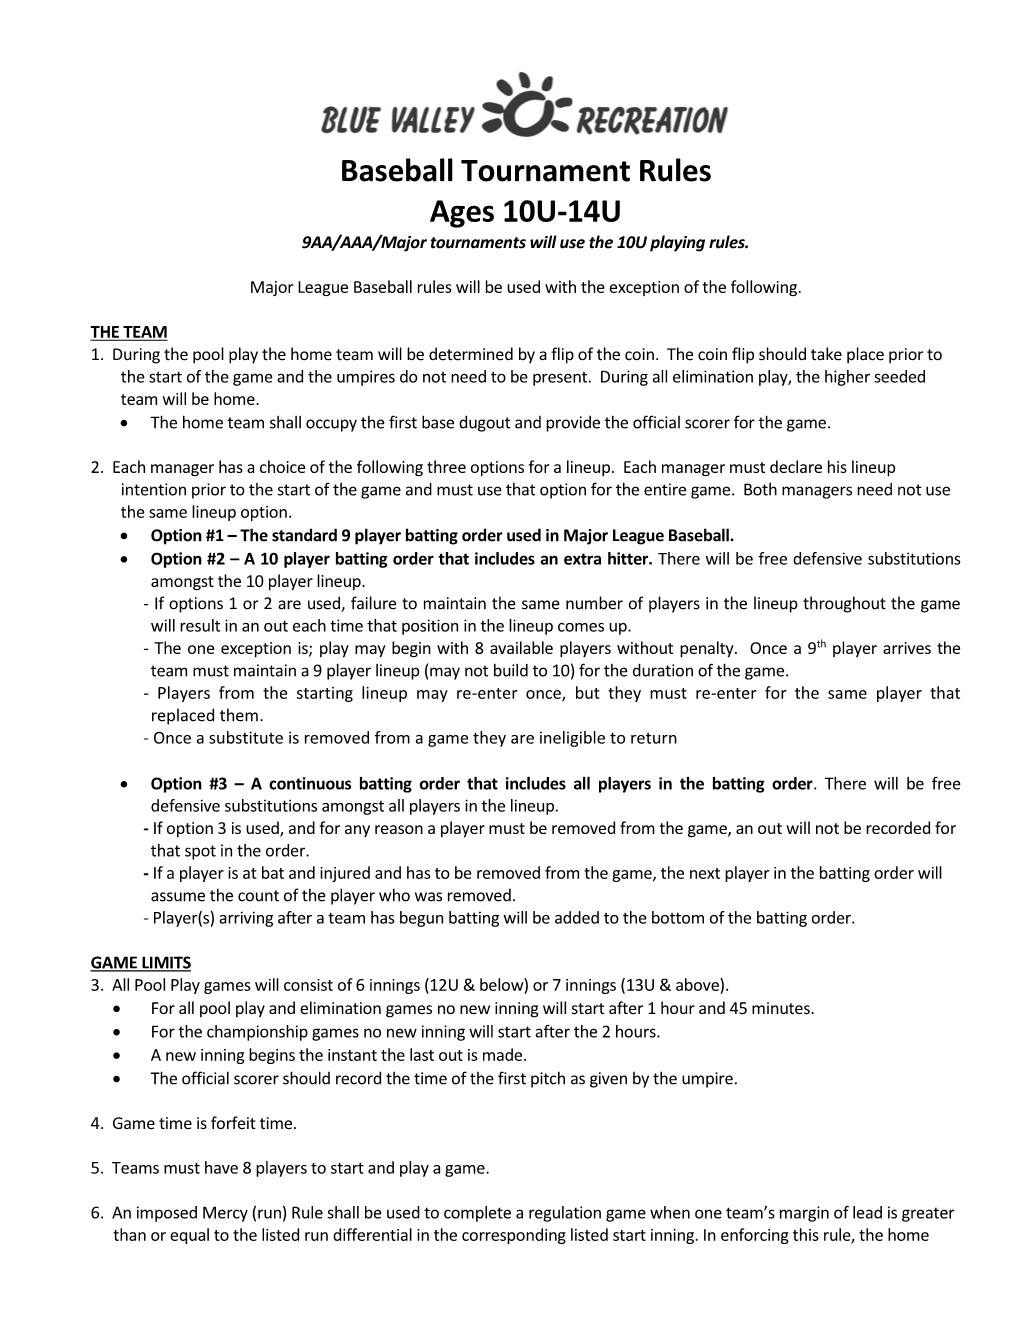 Baseball Tournament Rules Ages 10U-14U 9AA/AAA/Major Tournaments Will Use the 10U Playing Rules